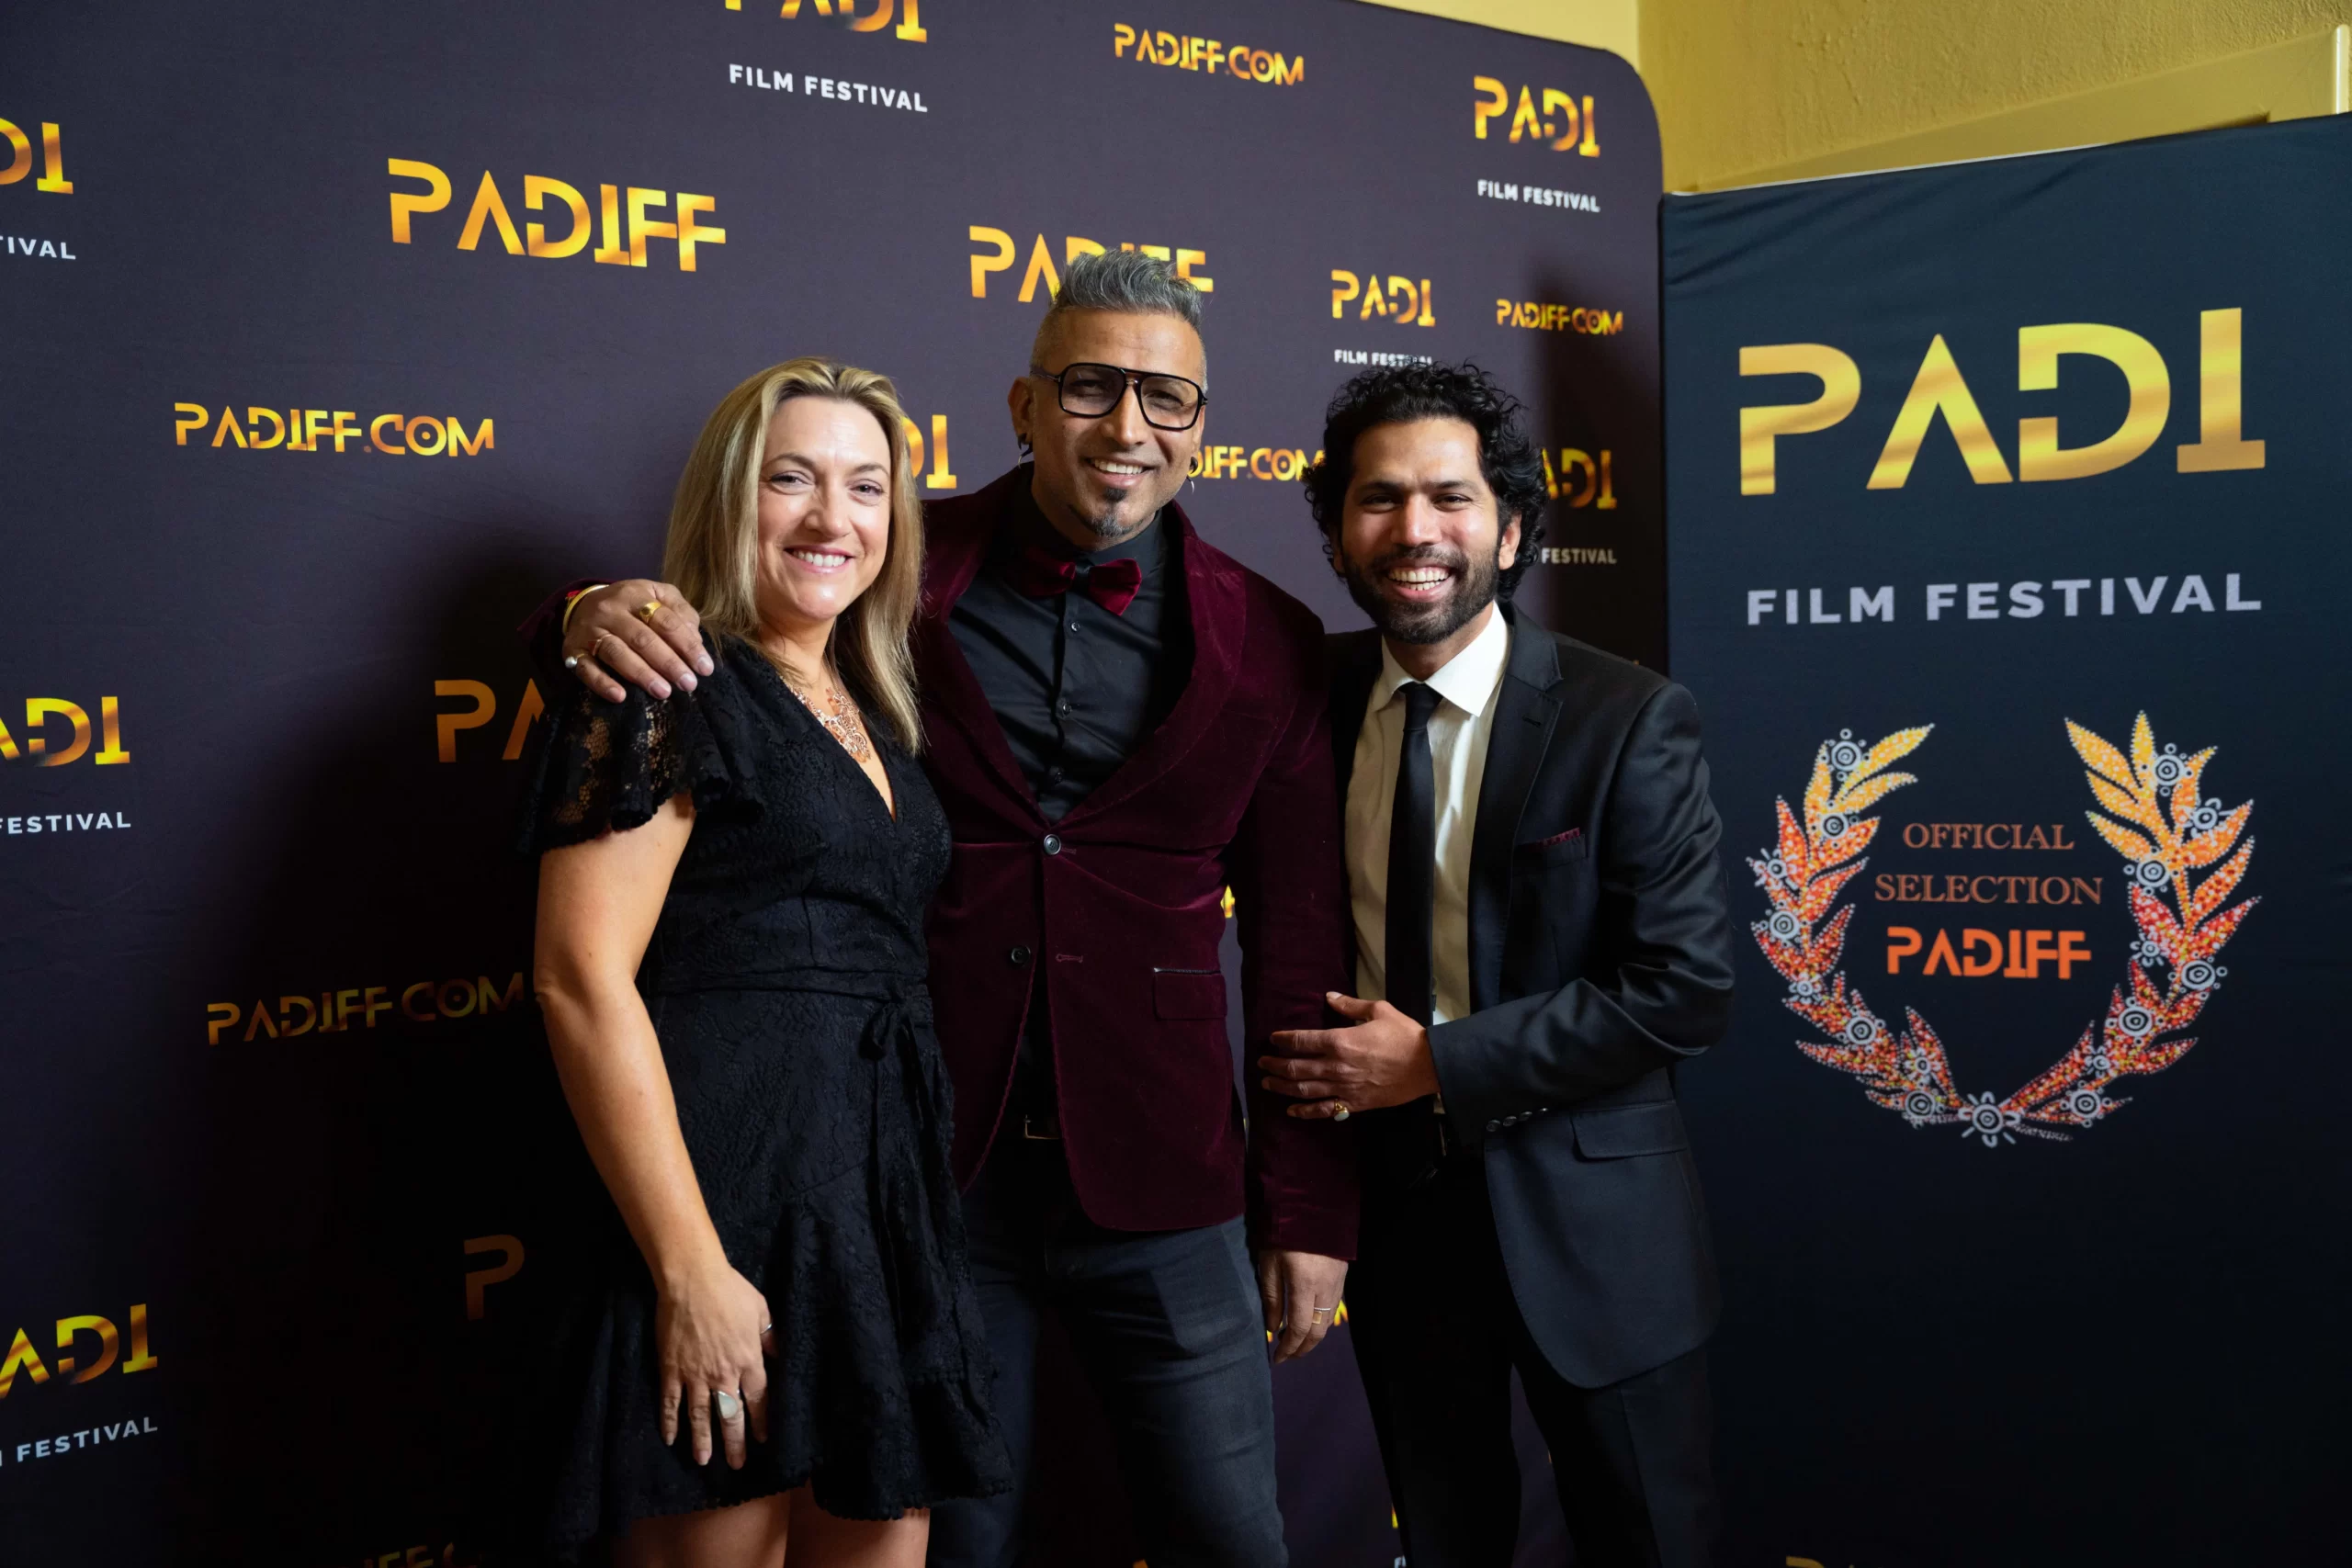 Port Adelaide Diversity & Inclusion Film Festival 2022